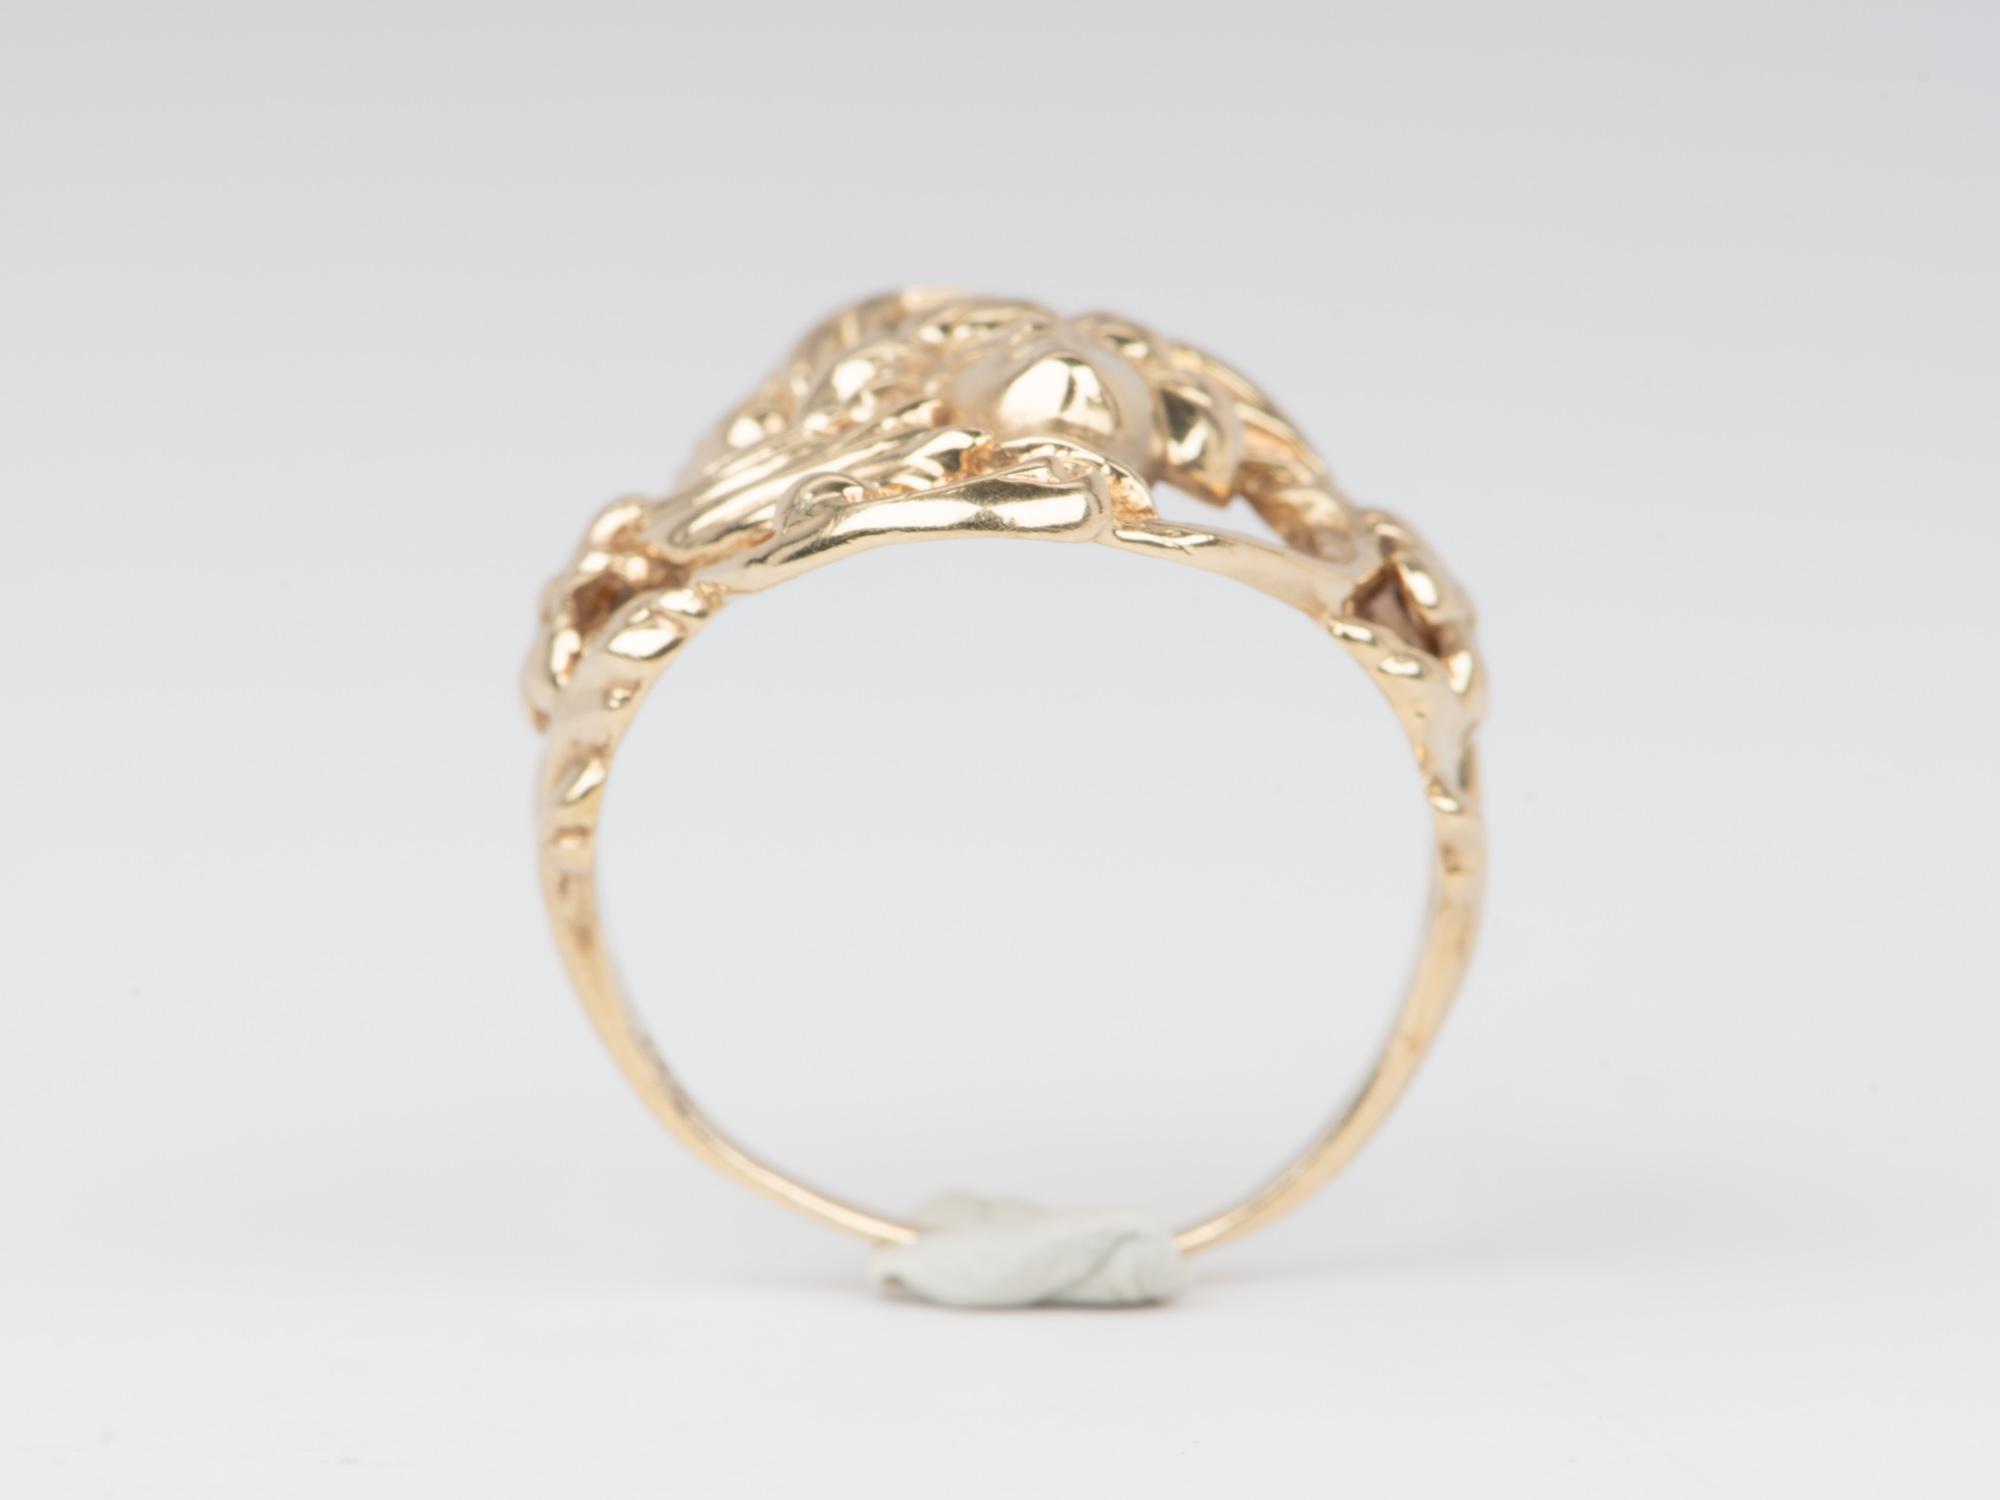 Vintage Jewelry Art Nouveau Floral Woman Ring 14K Gold 7g V1100 For Sale 1